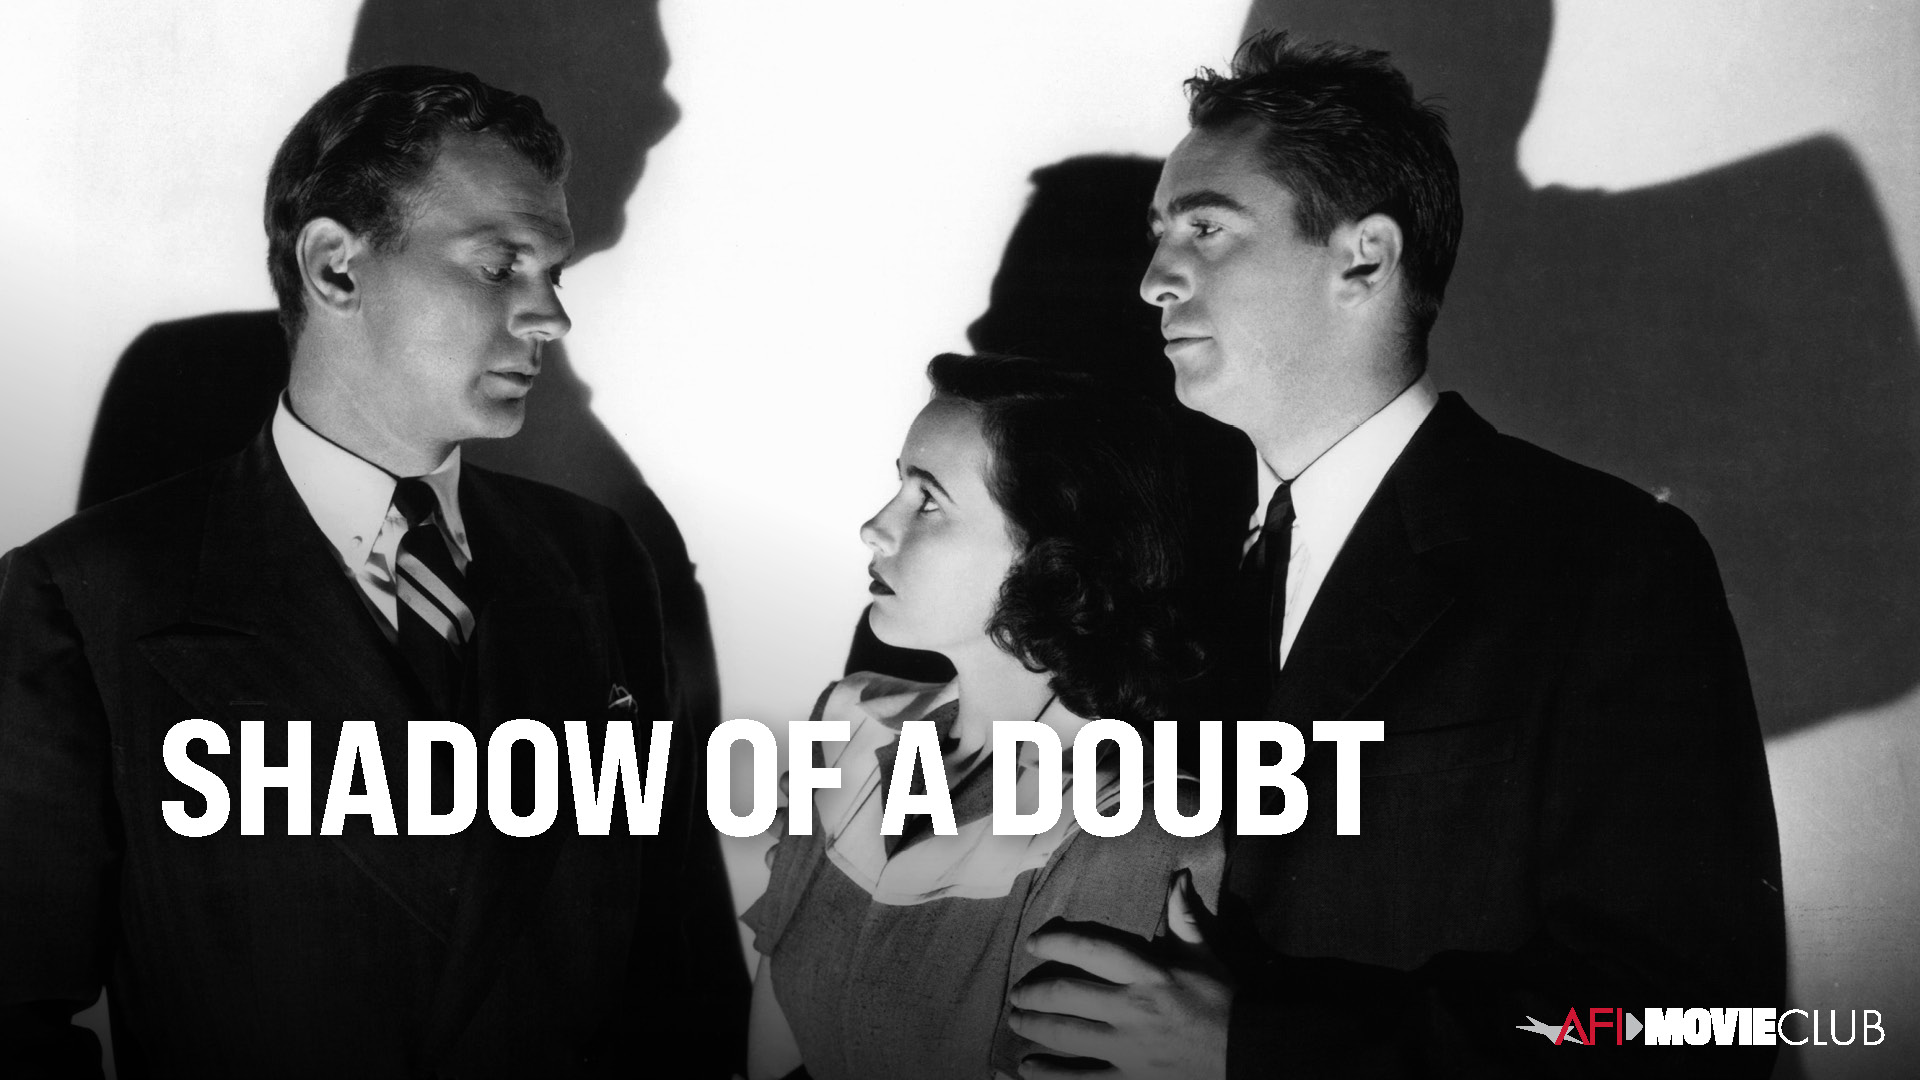 Shadow of a Doubt Film Still - Joseph Cotten, Macdonald Carey, and Teresa Wright